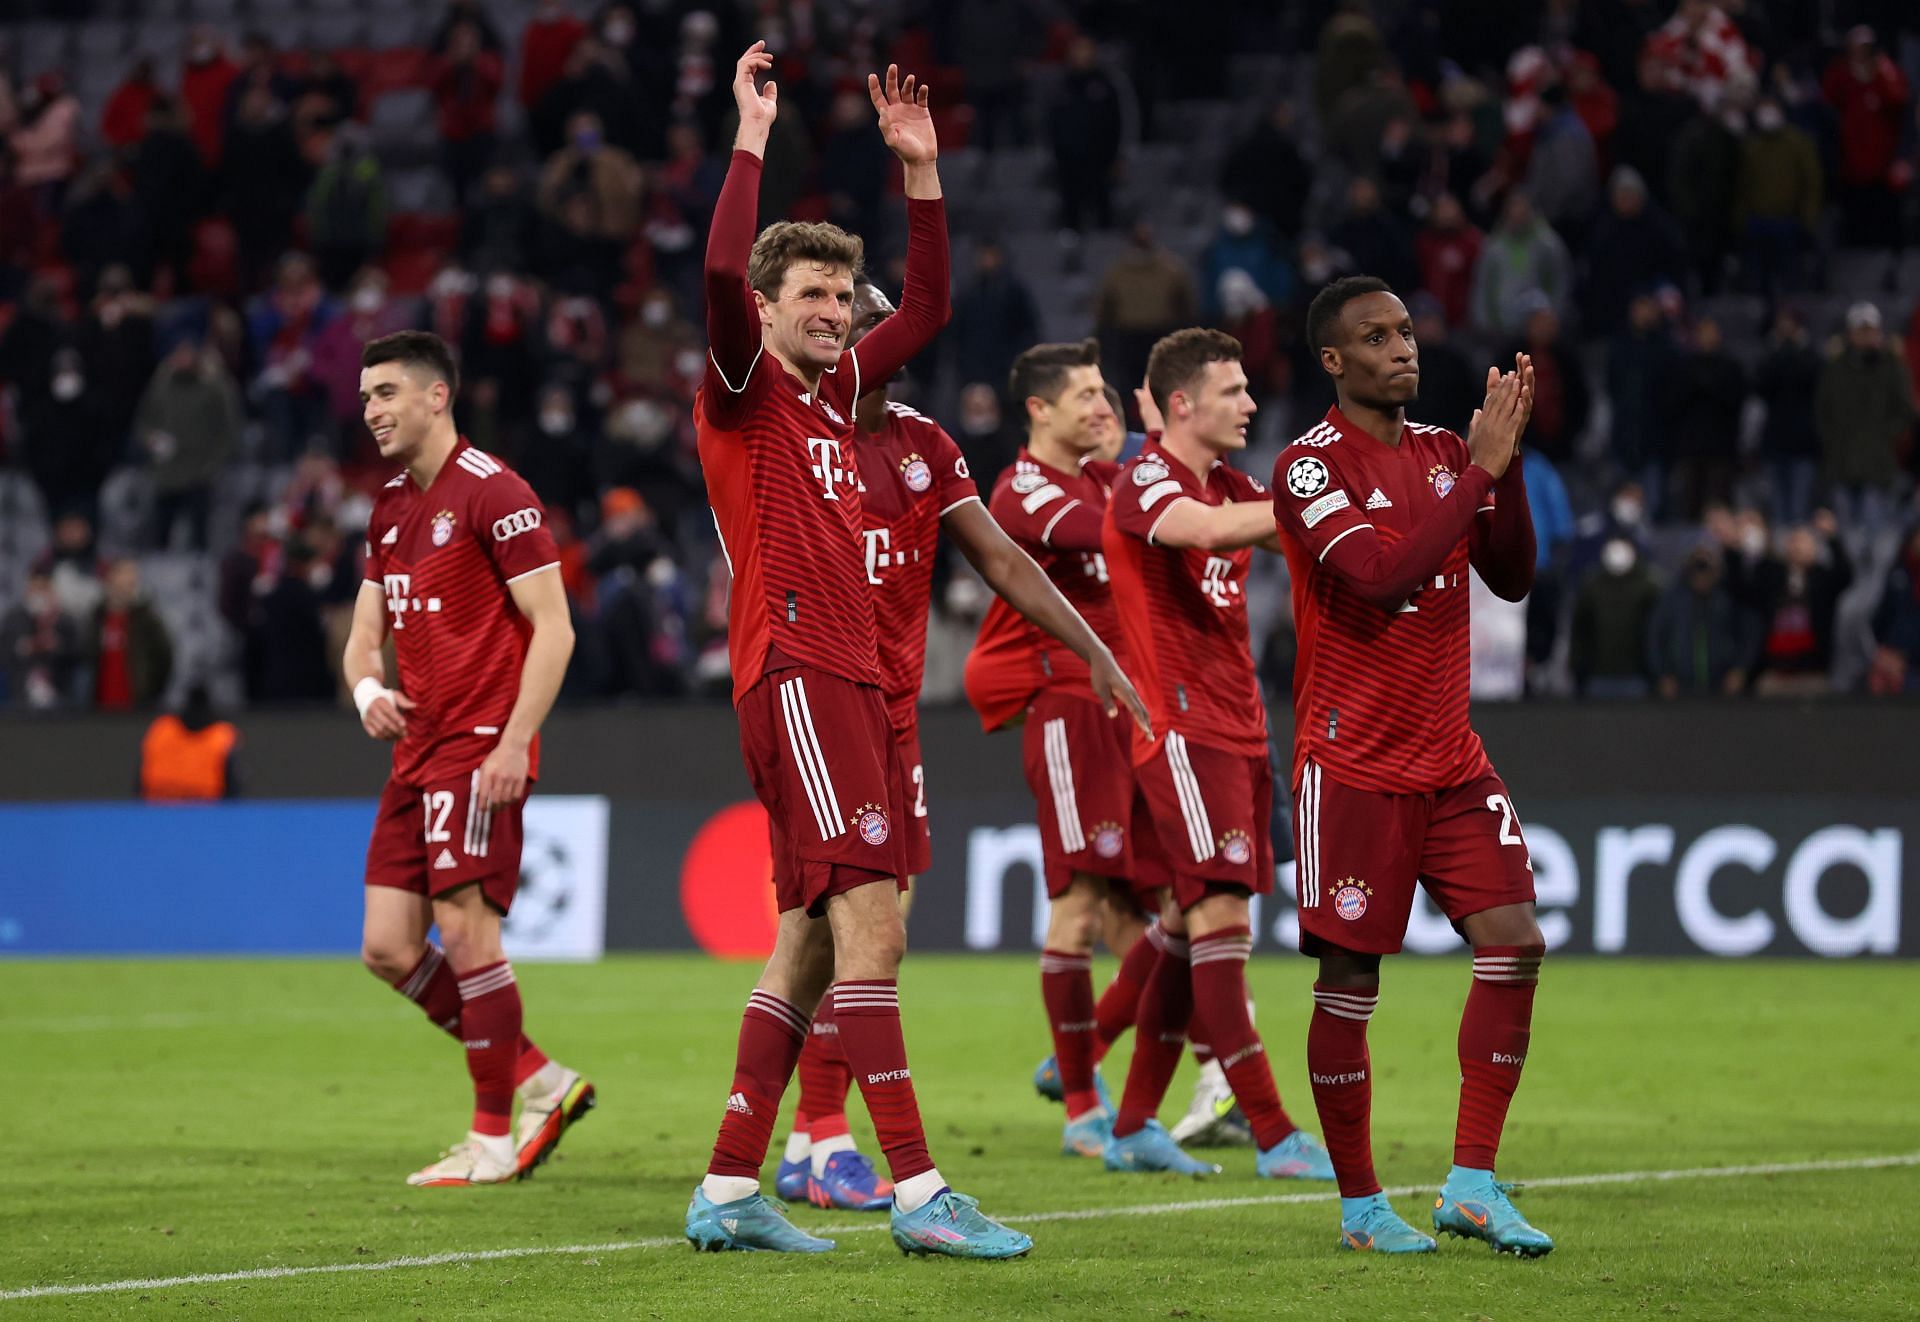 Bayern Munich celebrate a UEFA Champions League game win.